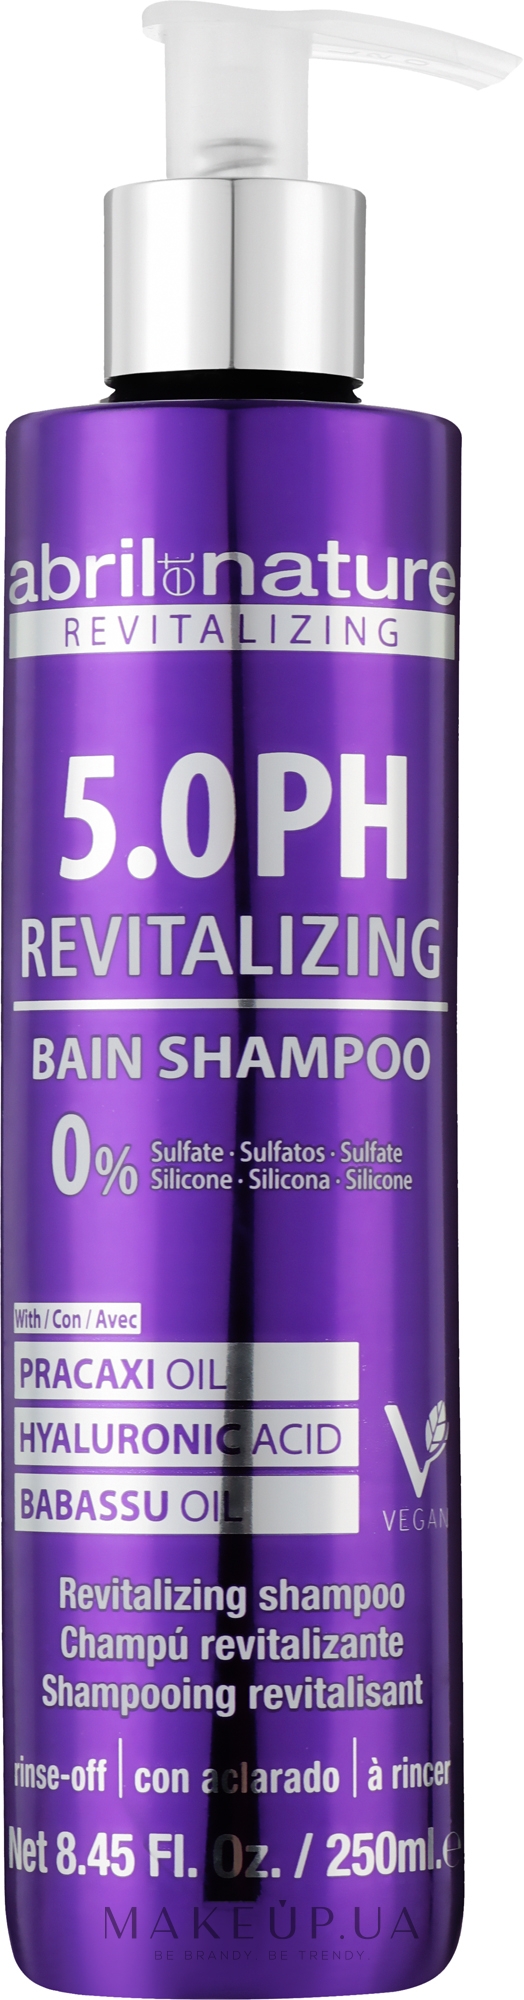 Восстанавливающий шампунь для волос - Abril et Nature 5.0 PH Revitalizing Bain Shampoo — фото 250ml